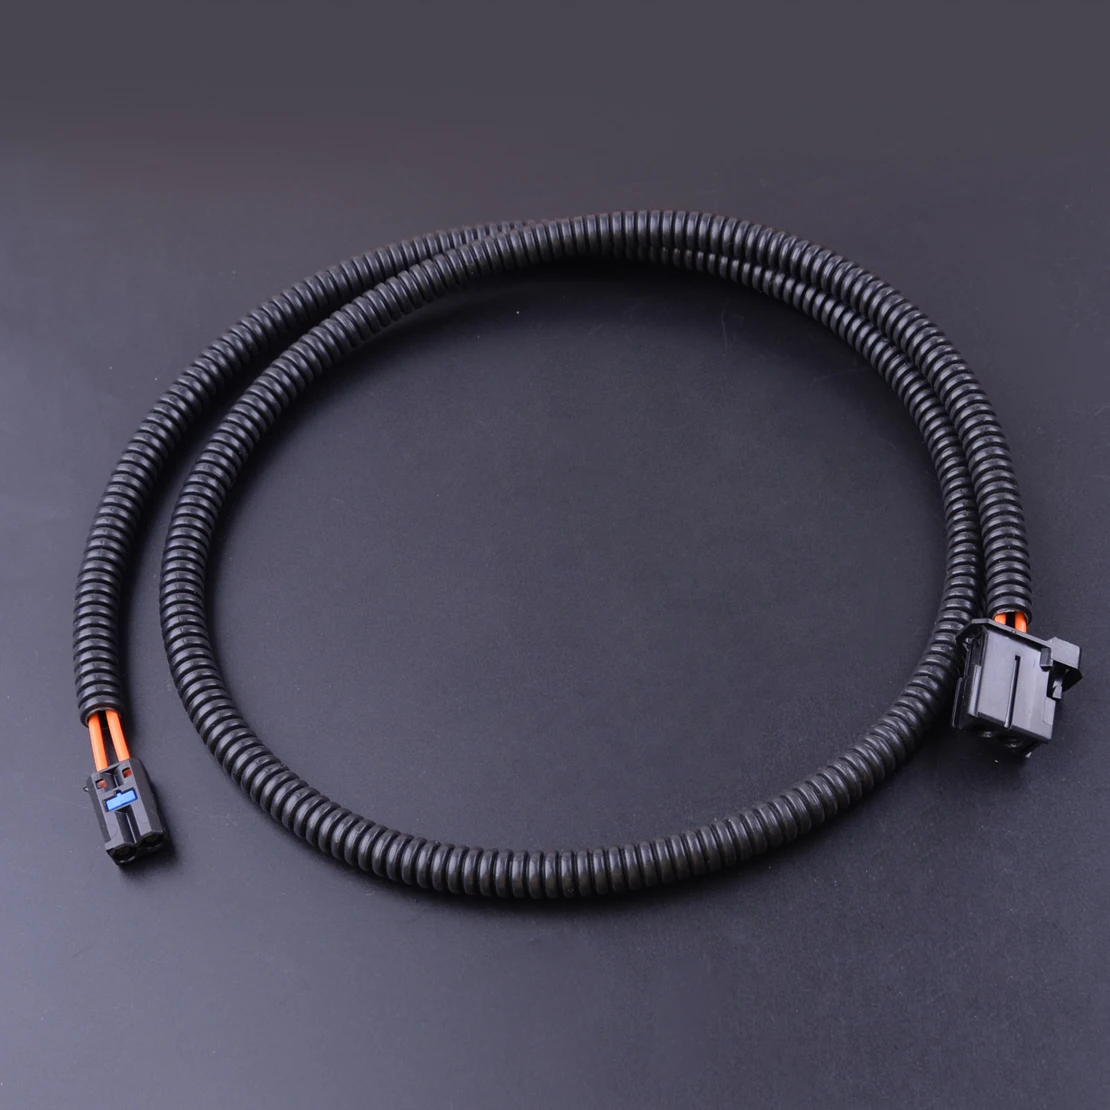 beler POF MOST 6WA 6WB Retrofit Optical Cable Male to Male Connector LWL Stift 100cm Fit For BMW F20 F30 Porsche